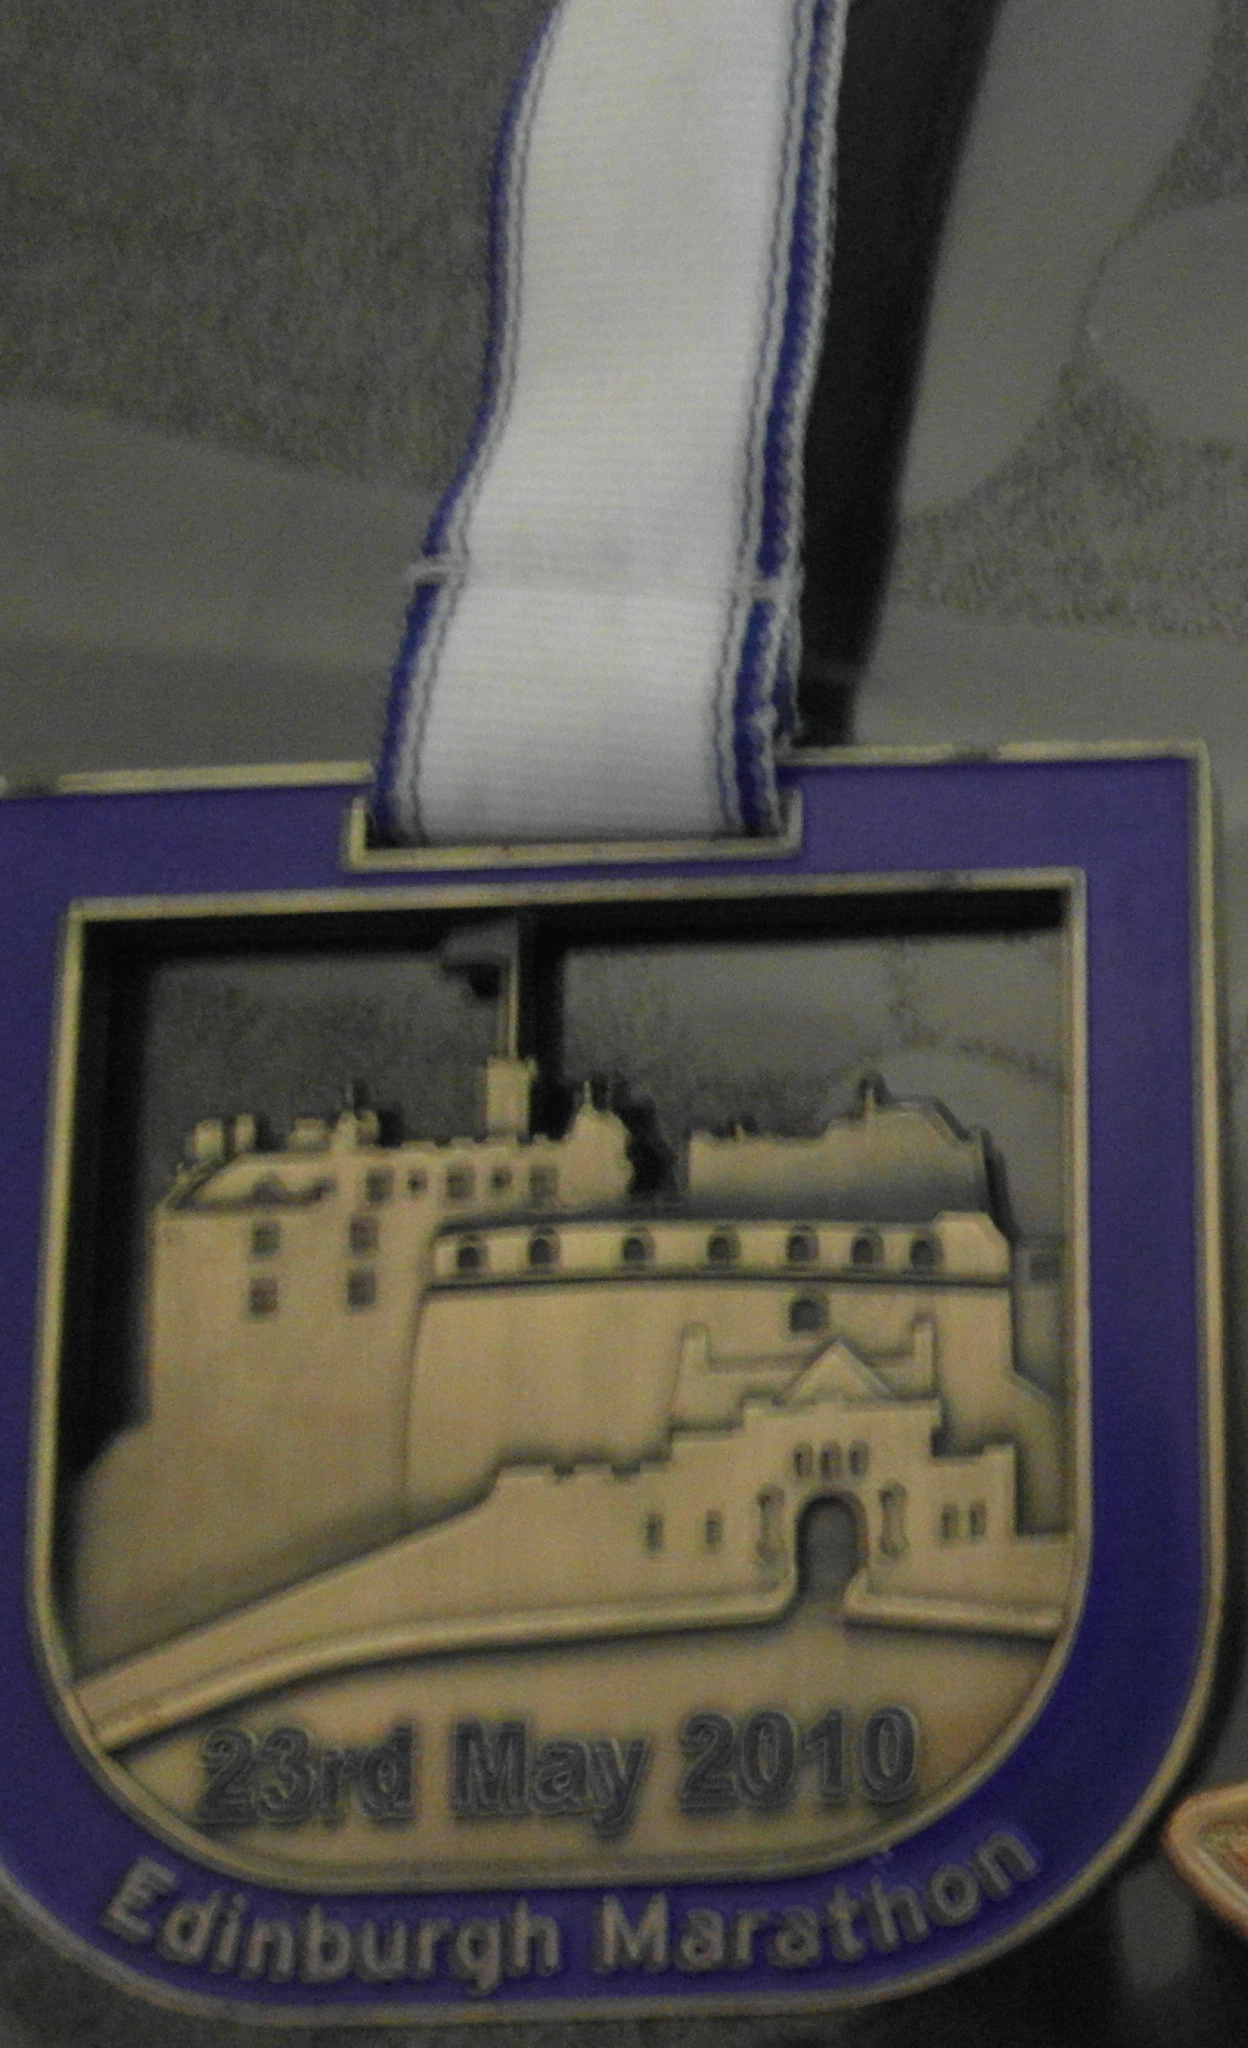 Edinburgh Marathon Medal - Locomotive , HD Wallpaper & Backgrounds